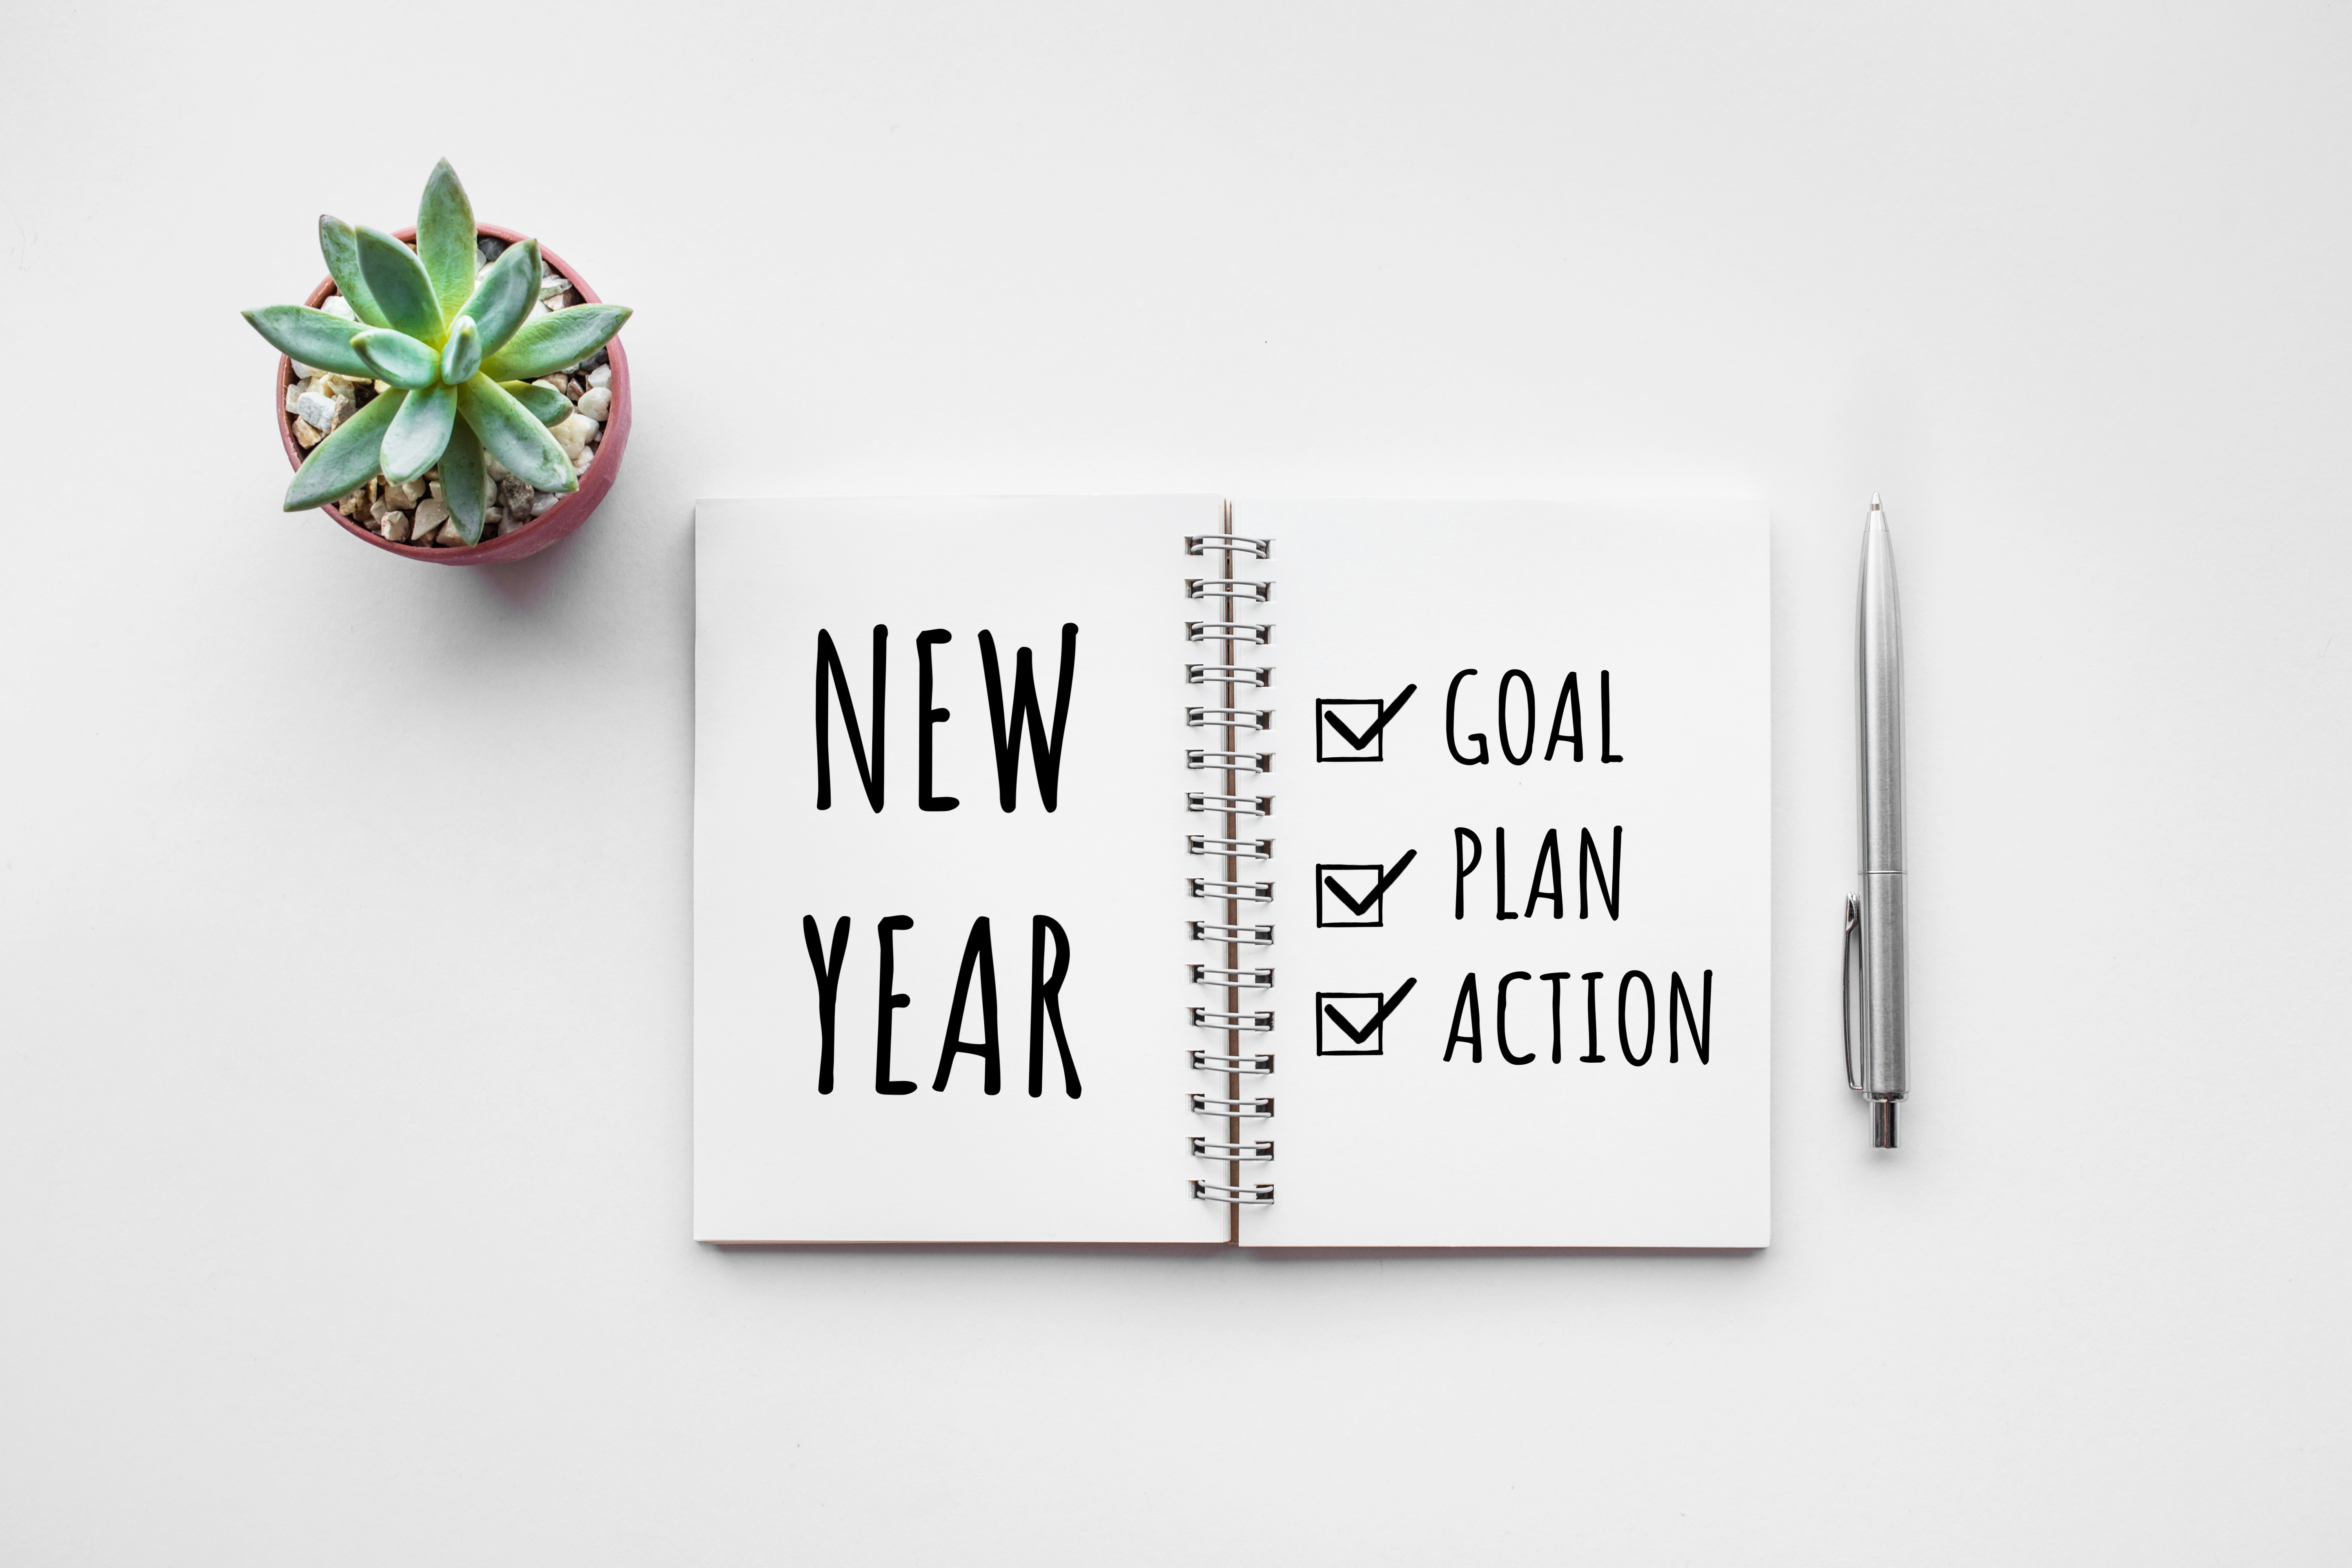 New year what to do. Планы на новый год. Цели на новый год. Новогодние цели. Цели на новый год блокнот.